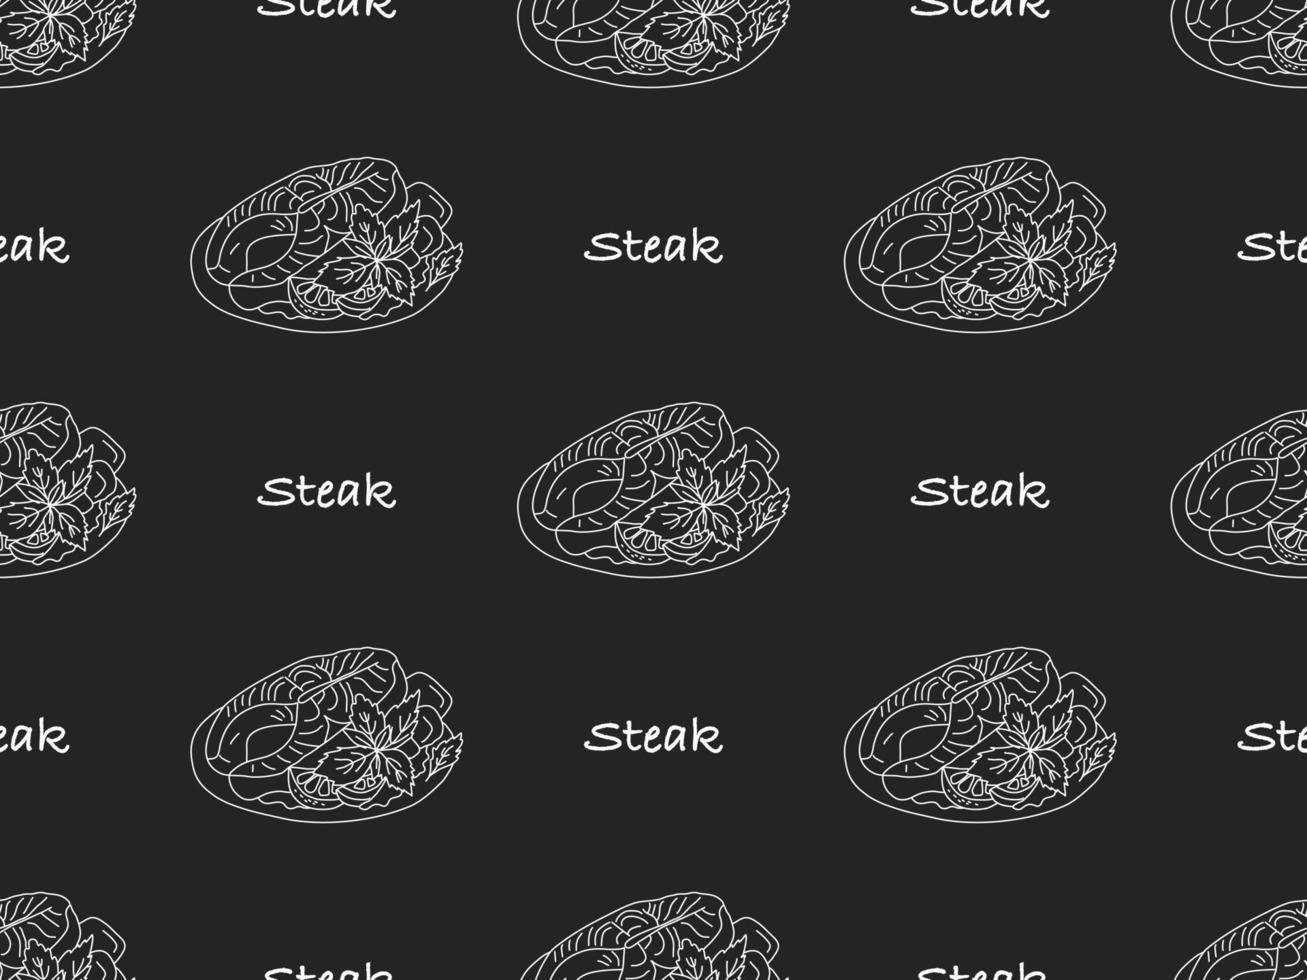 Steak cartoon character seamless pattern on black background vector